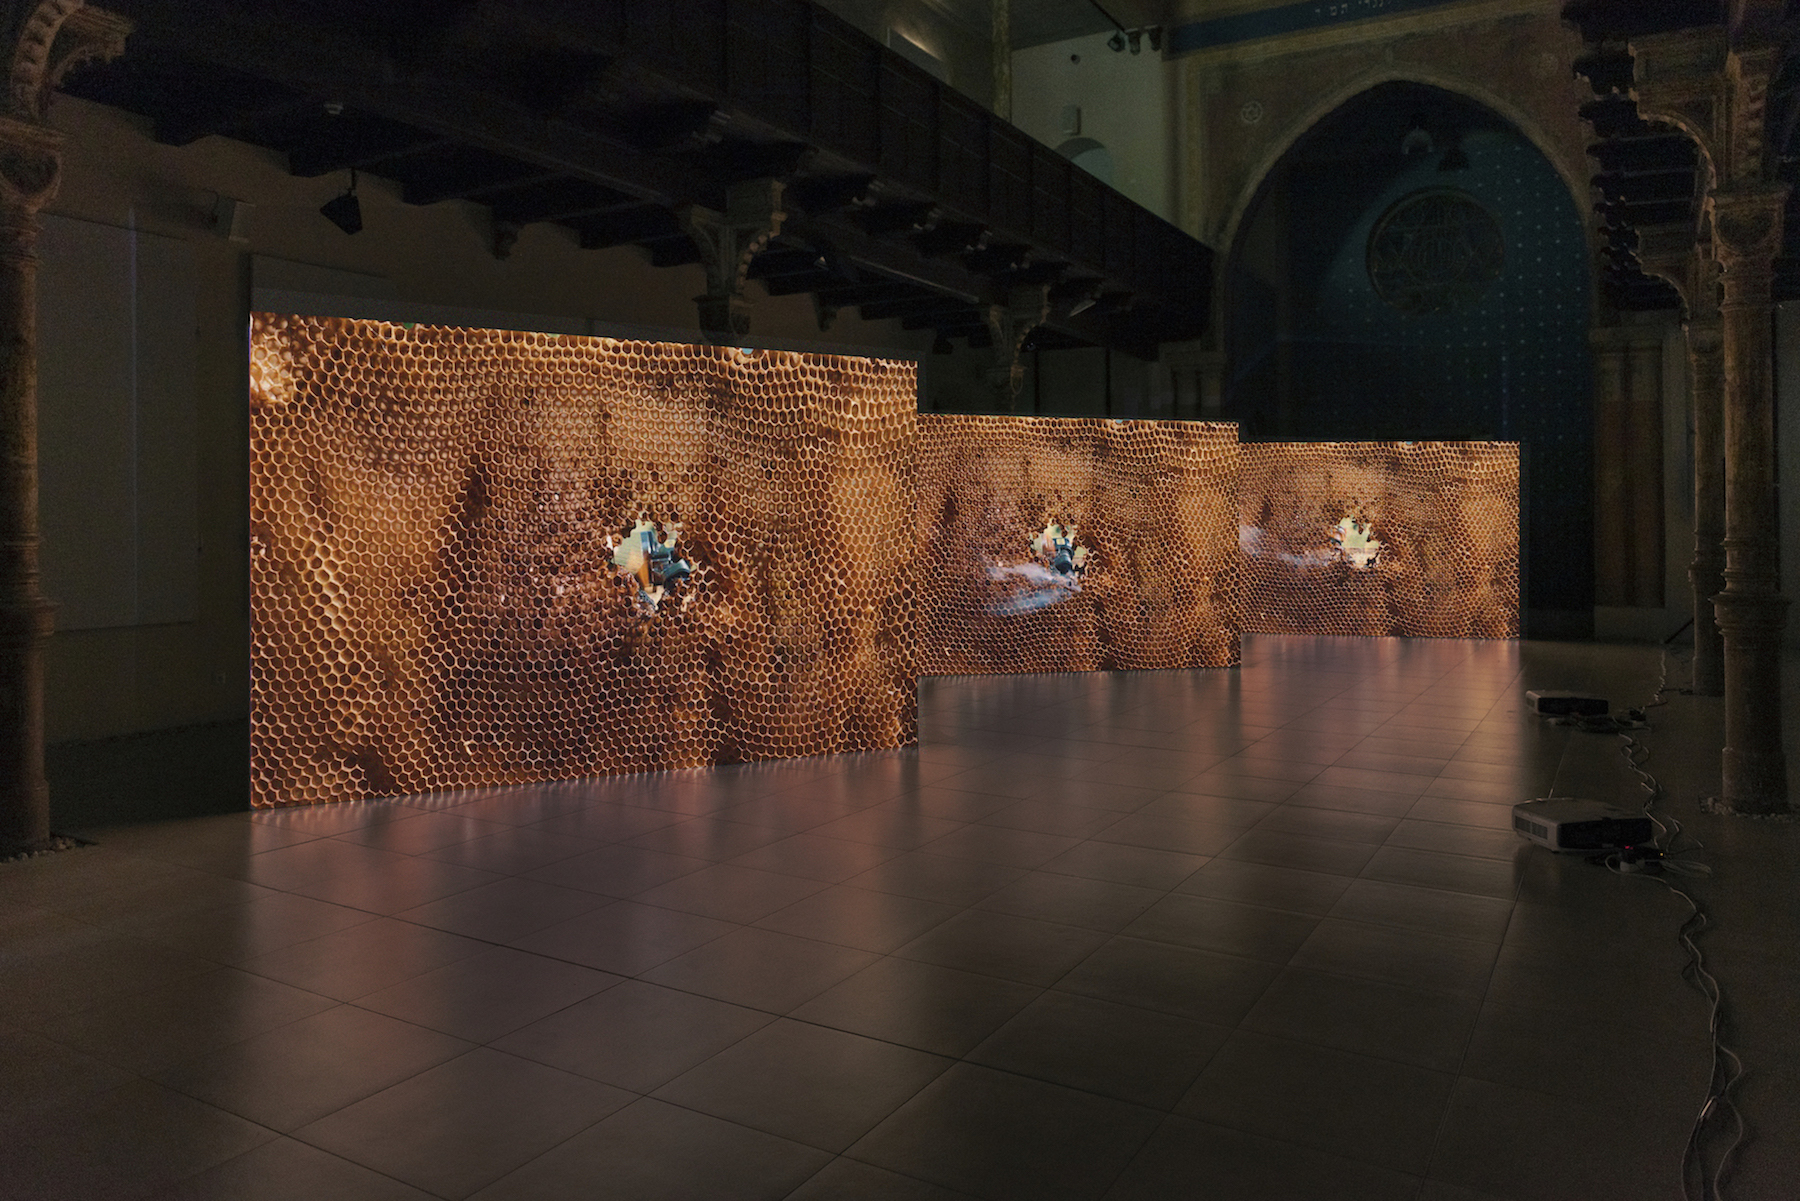 Jaroslav Kyša, Order Of Waves, 2020, video installation